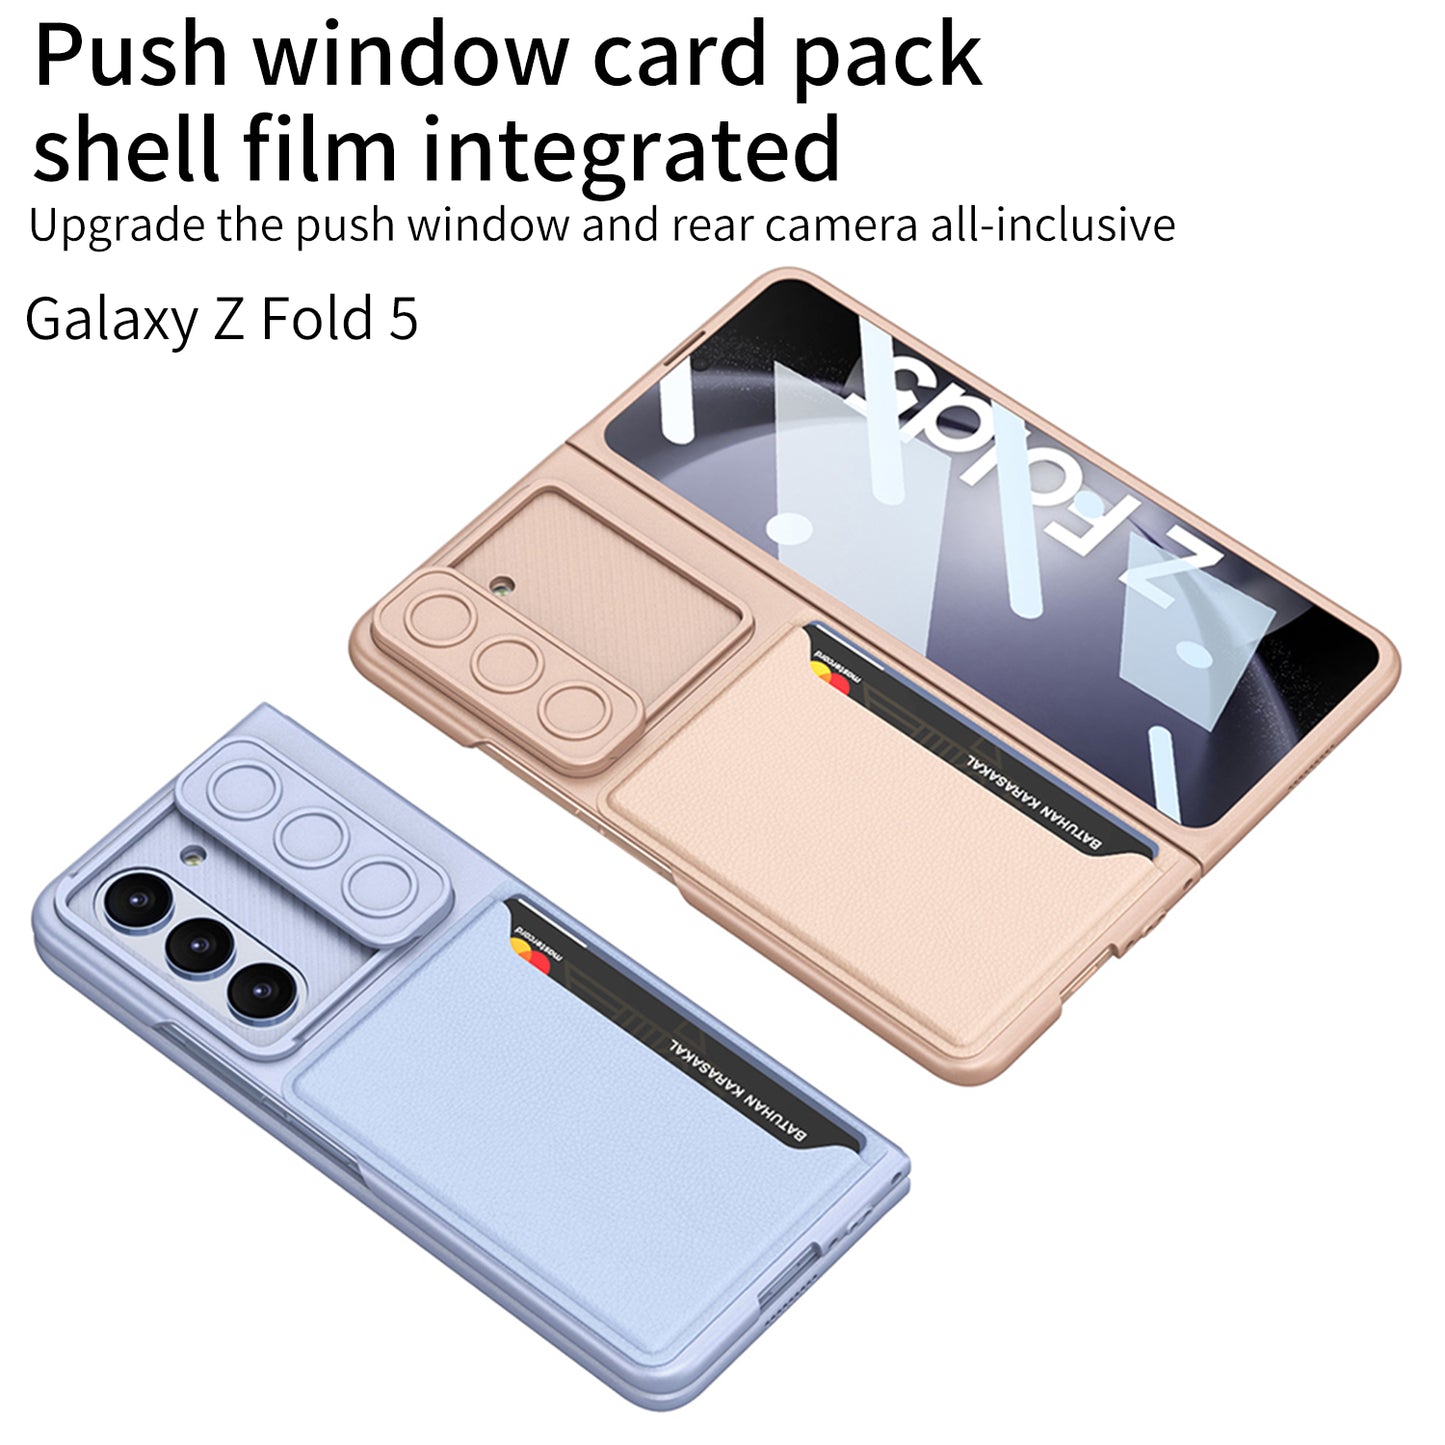 Push Window Cardholder Case For Samsung Galaxy Z Fold5 With Film